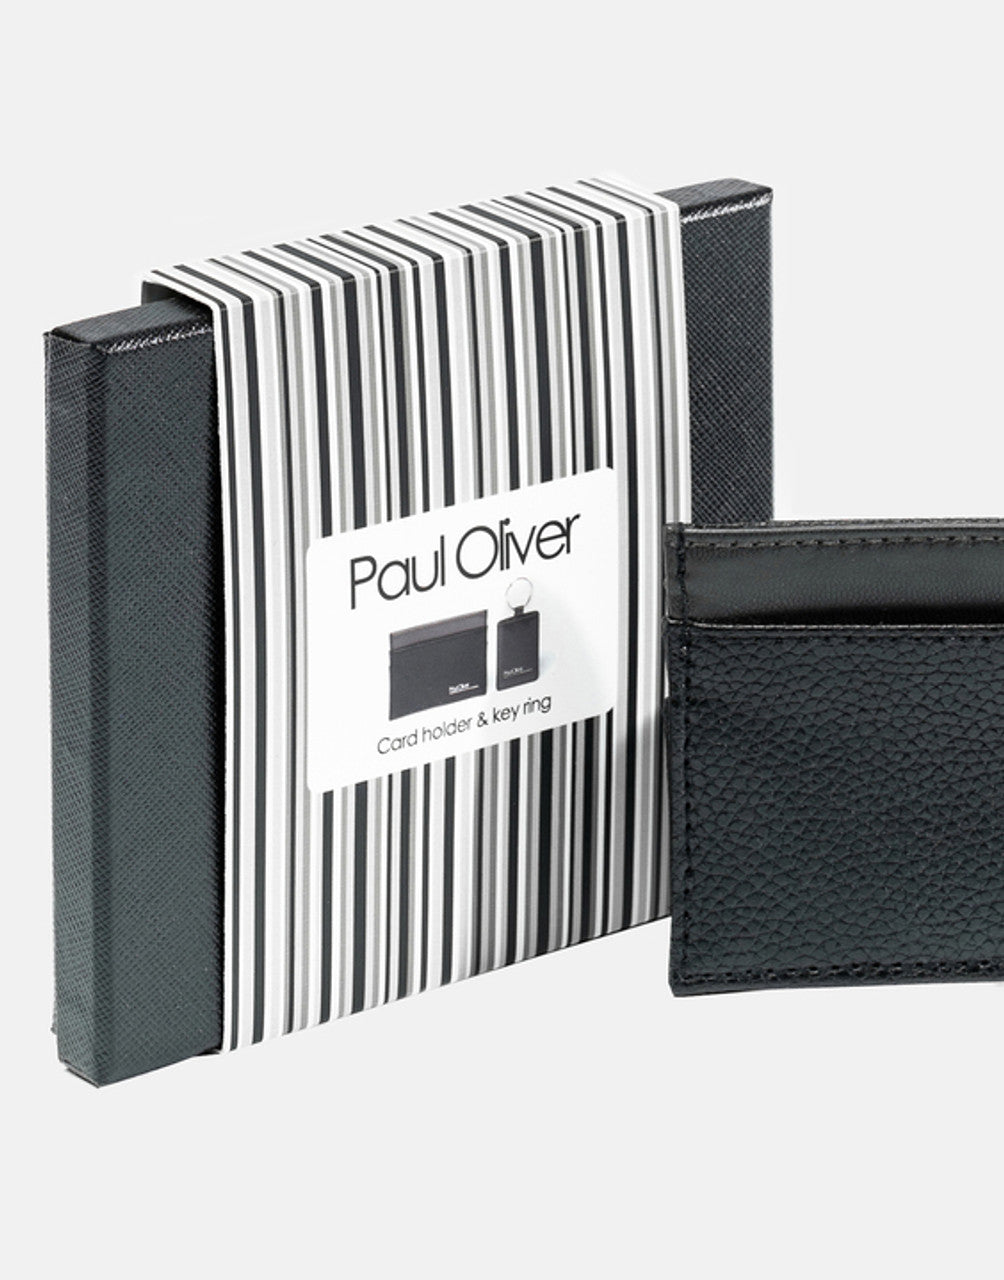 Paul Oliver Card Holder & Key Ring Gift Set